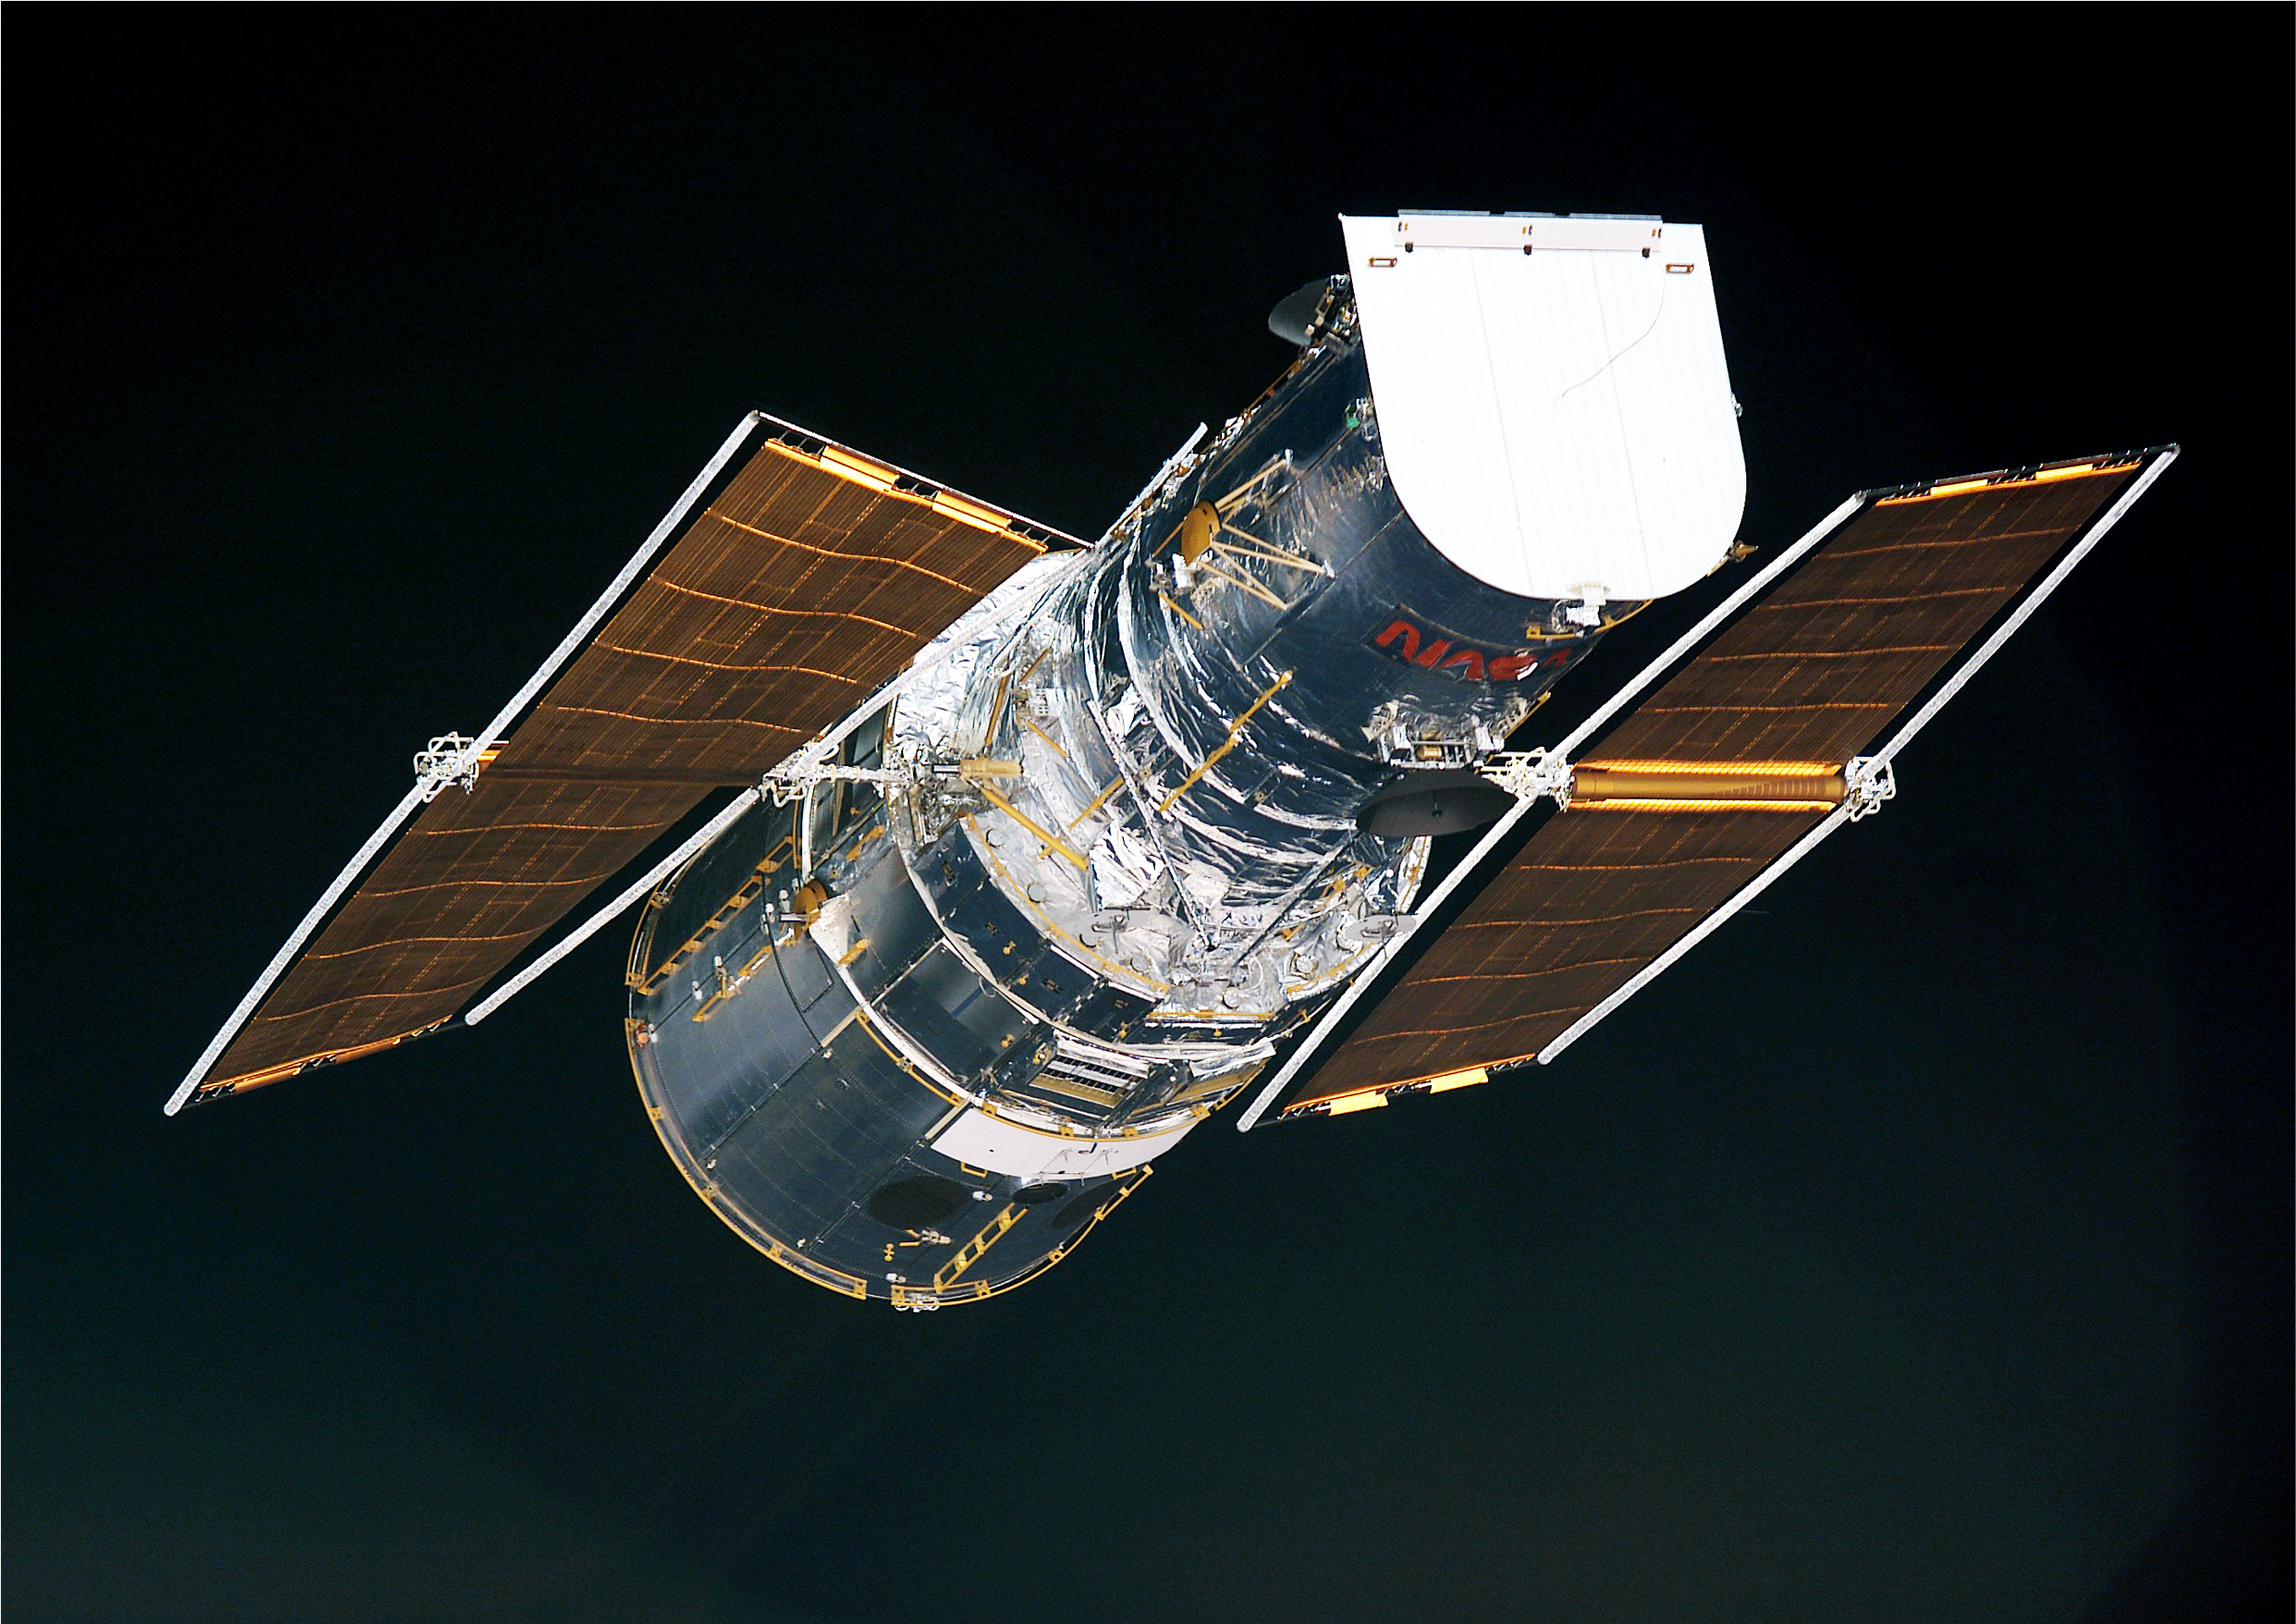 Hubble solar arrays after Servicing Mission 3B